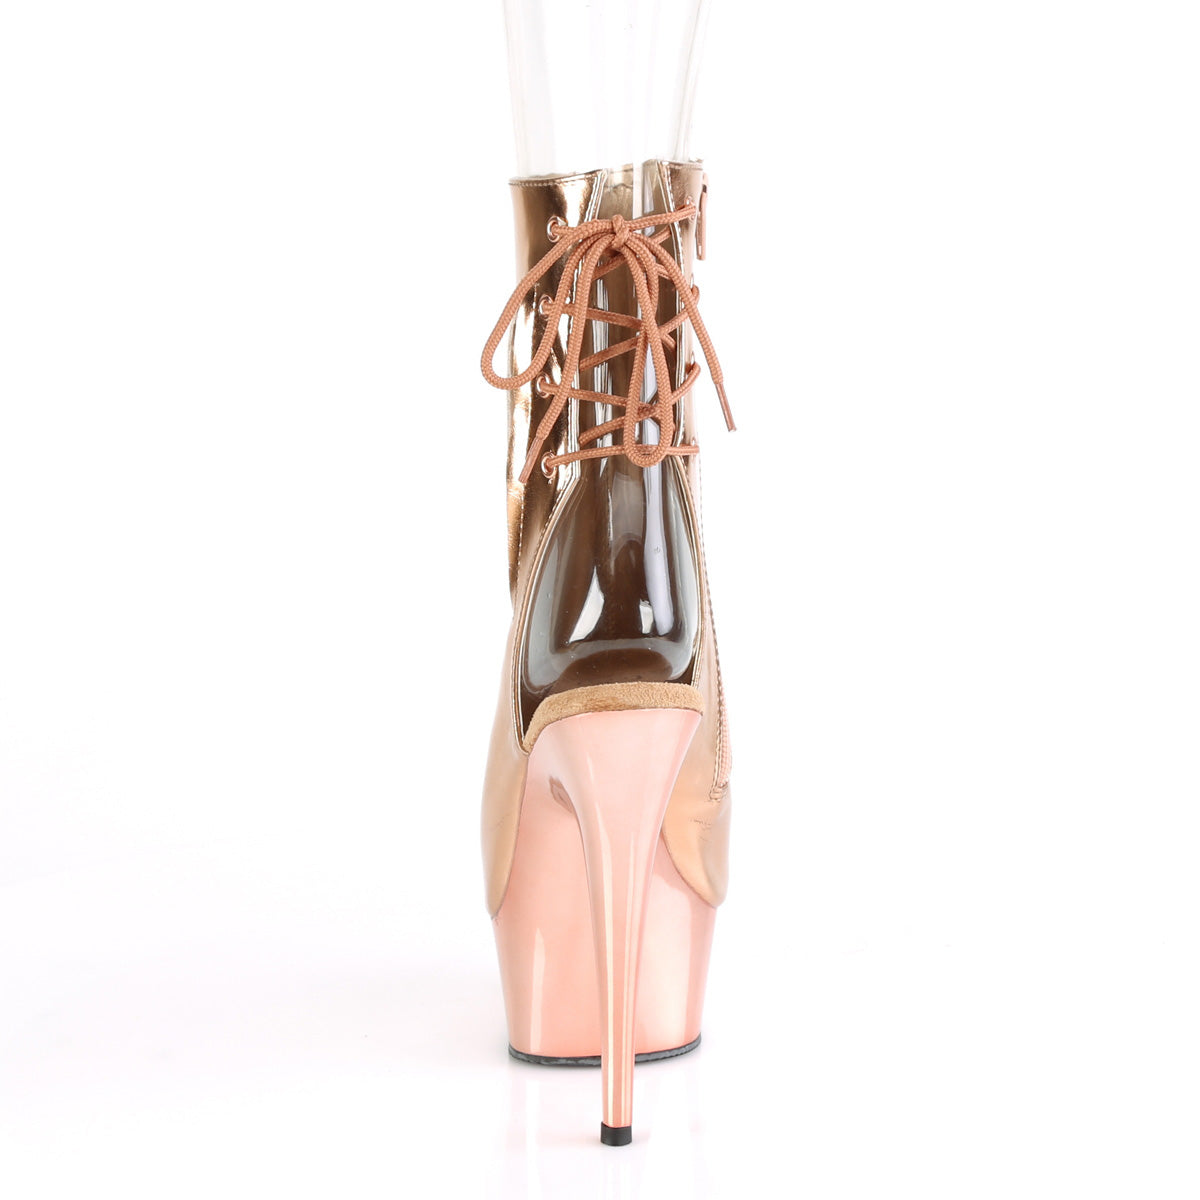 DELIGHT-1018 6" Heel Rose Gold Metallic Pole Dancer Boots-Pleaser- Sexy Shoes Fetish Footwear